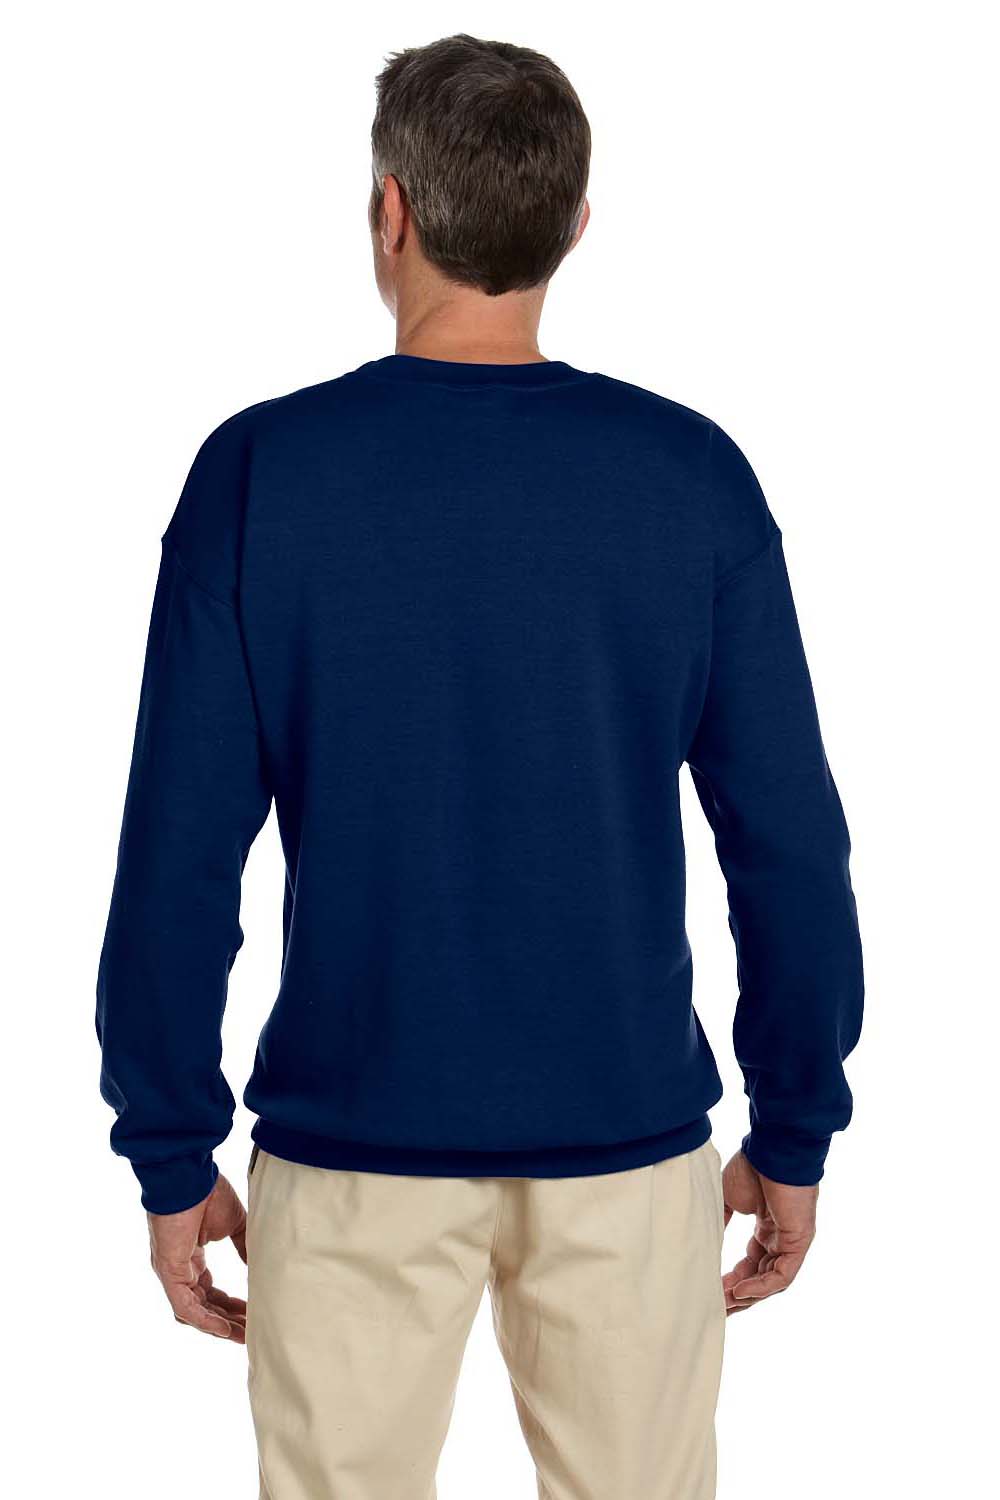 Gildan G180 Mens Fleece Crewneck Sweatshirt Navy Blue Back